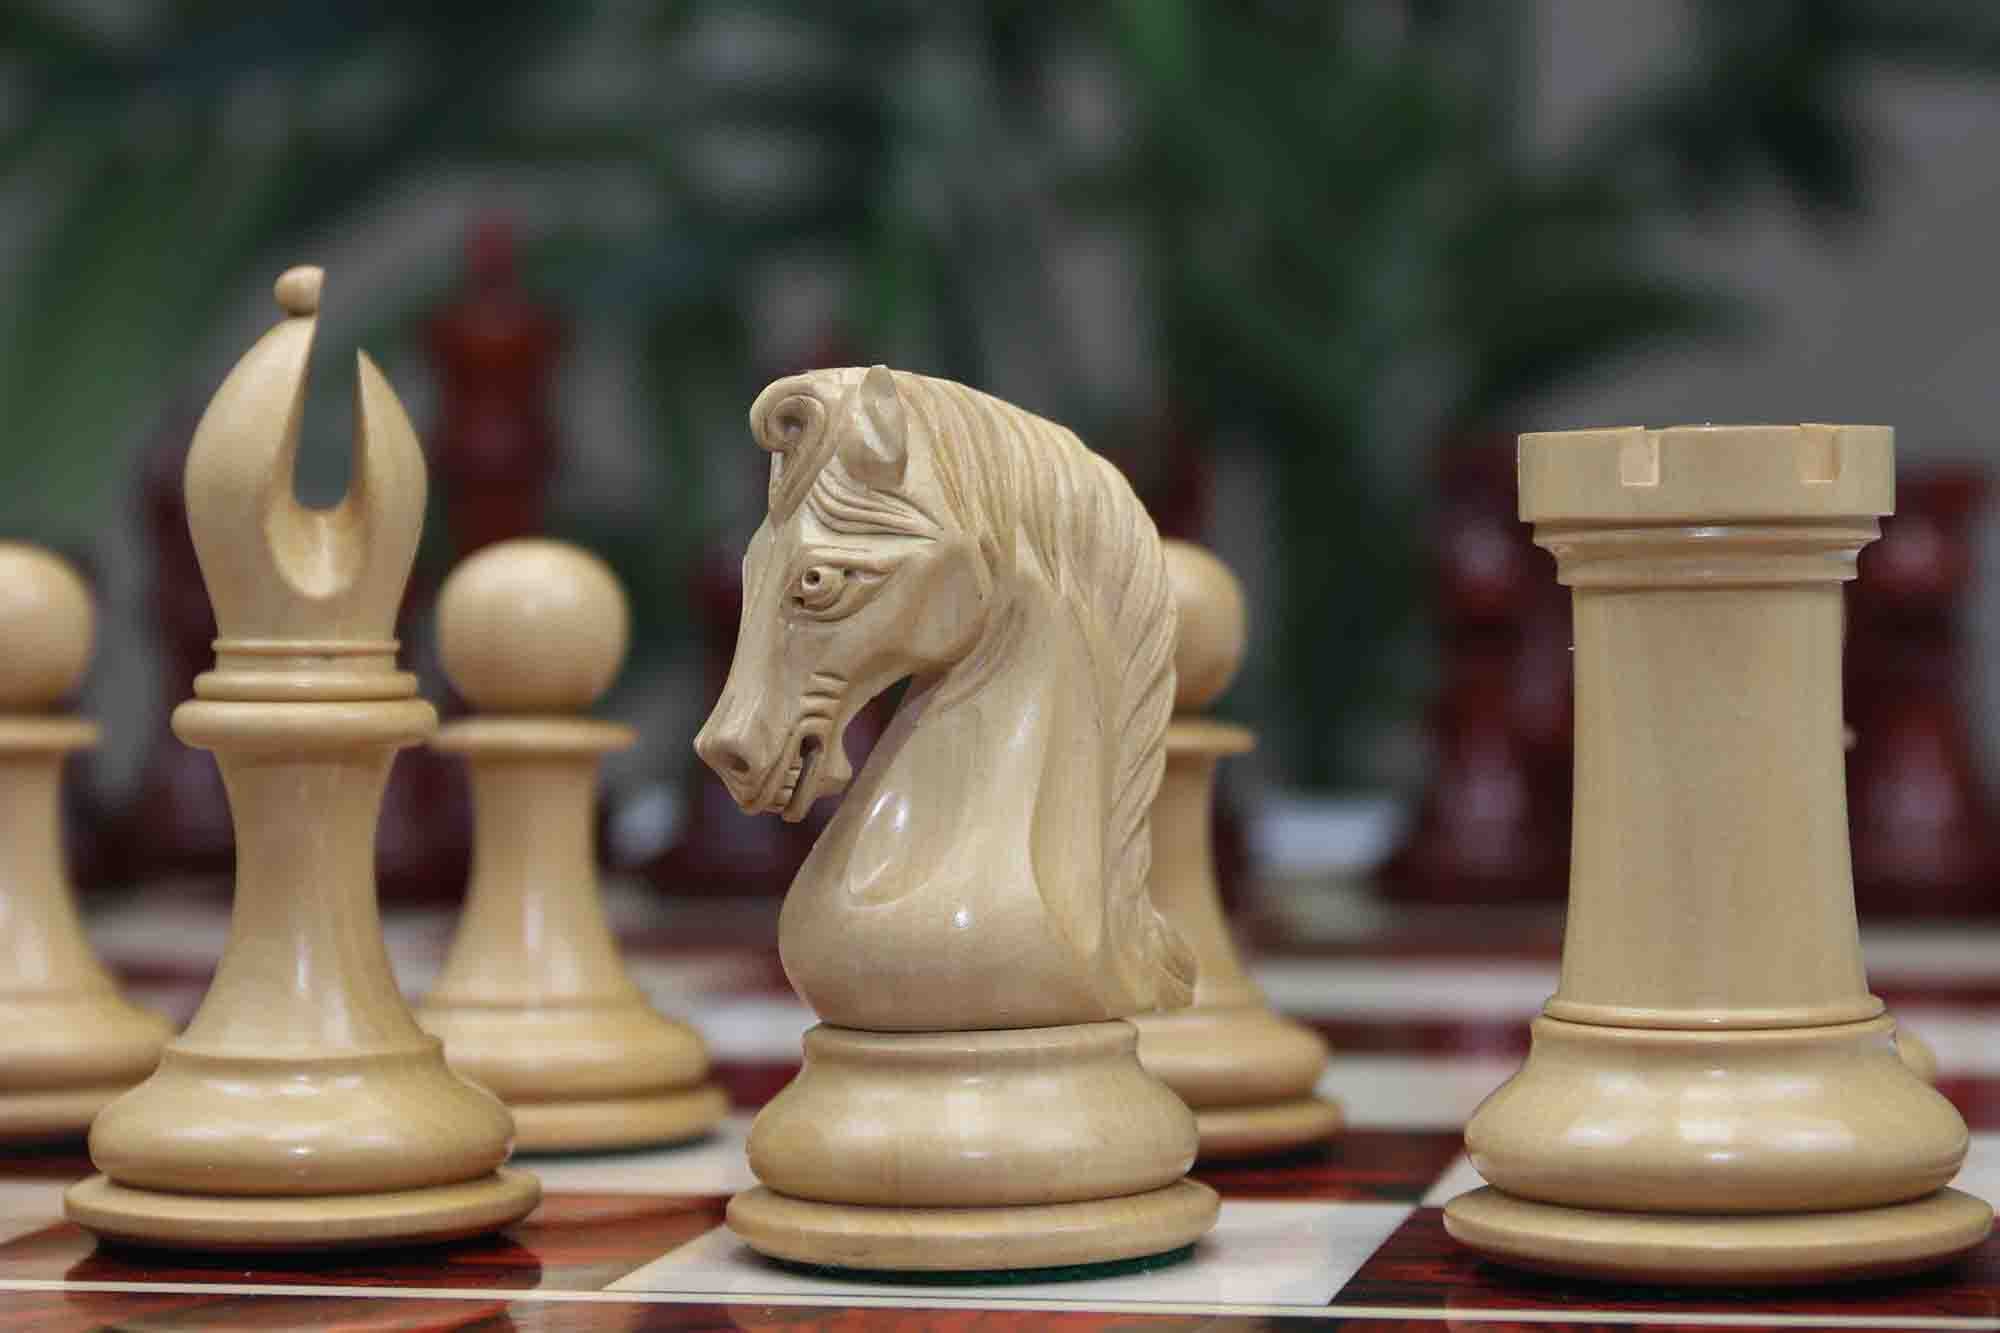 The Kings Crown Series Chess Pieces Boxwood & Padauk 4.25 King